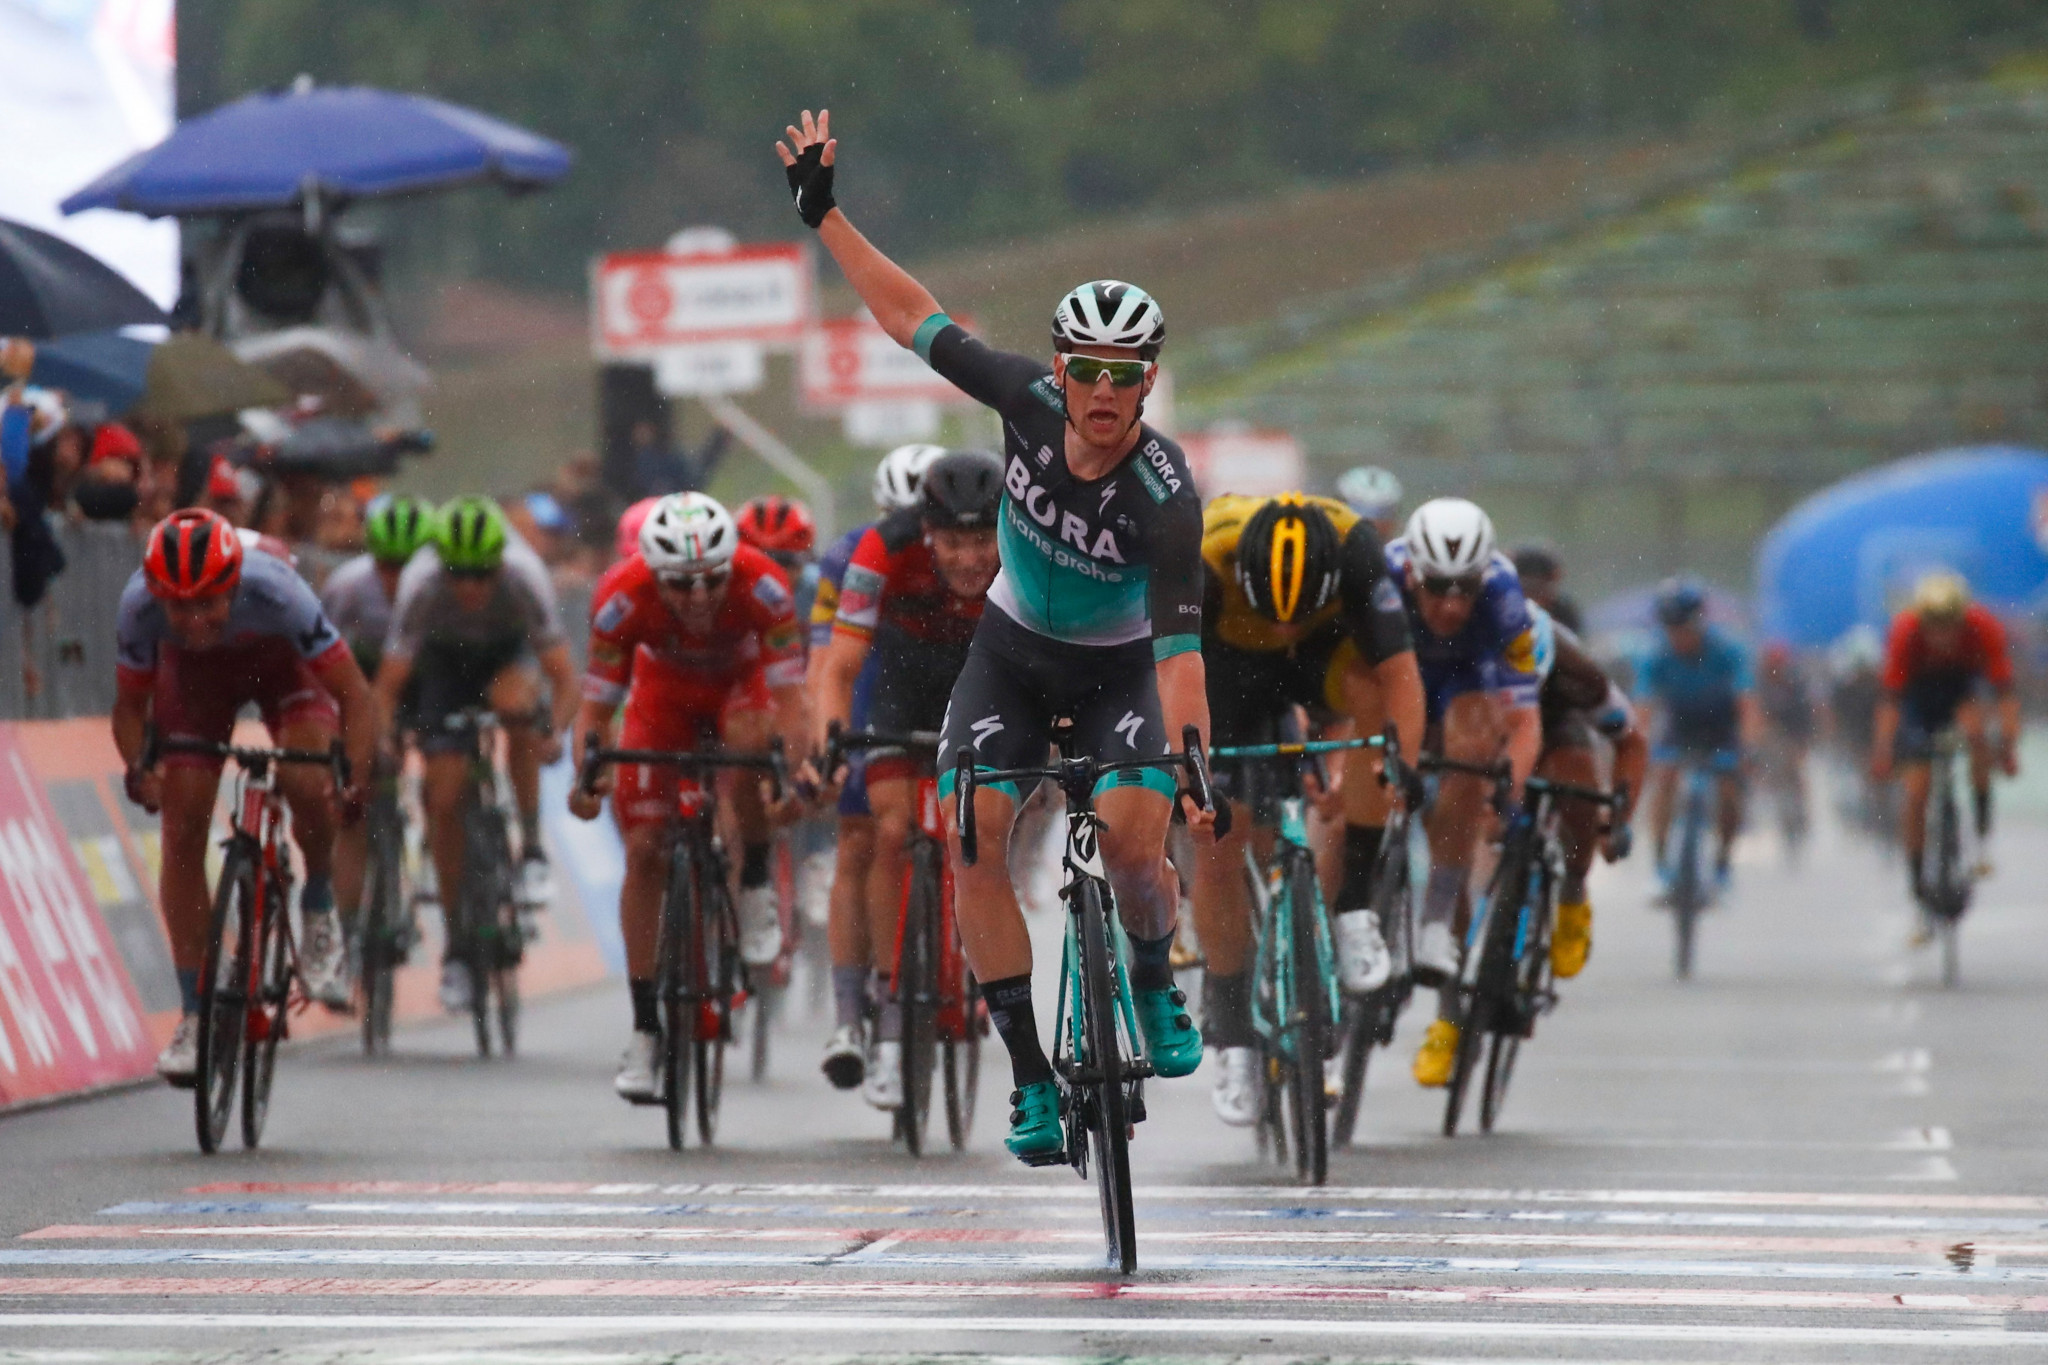 Bennett clinches second stage win on rain sodden Giro d'Italia finish at Imola